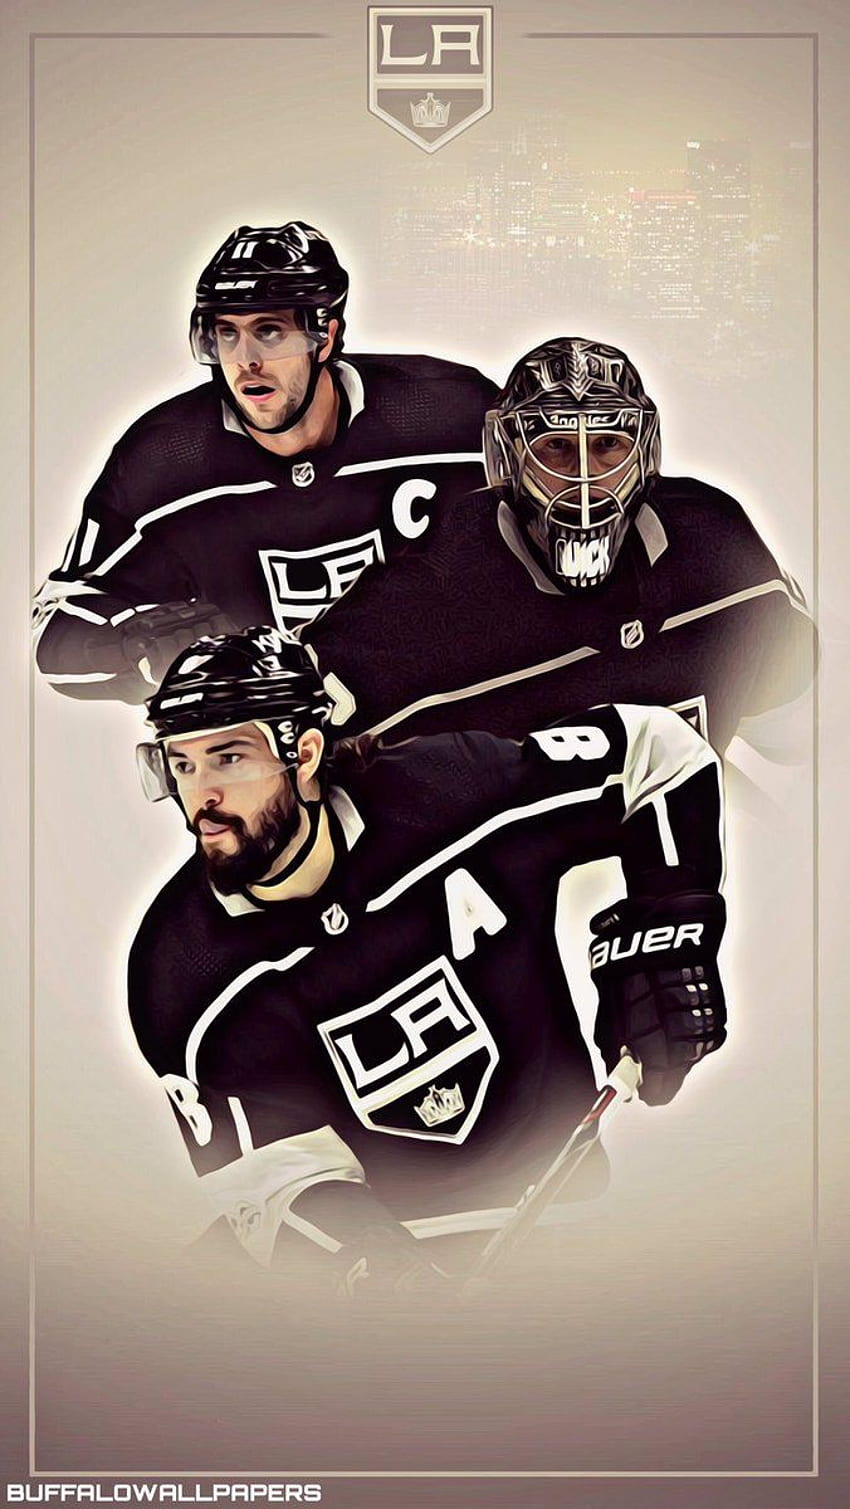 Jordan Santalucia on X: NHL 2018 iPhone wallpapers: Philadelphia Flyers,  Pittsburgh Penguins, and San Jose Sharks. #NHL #Flyers #Penguins #SJSharks   / X